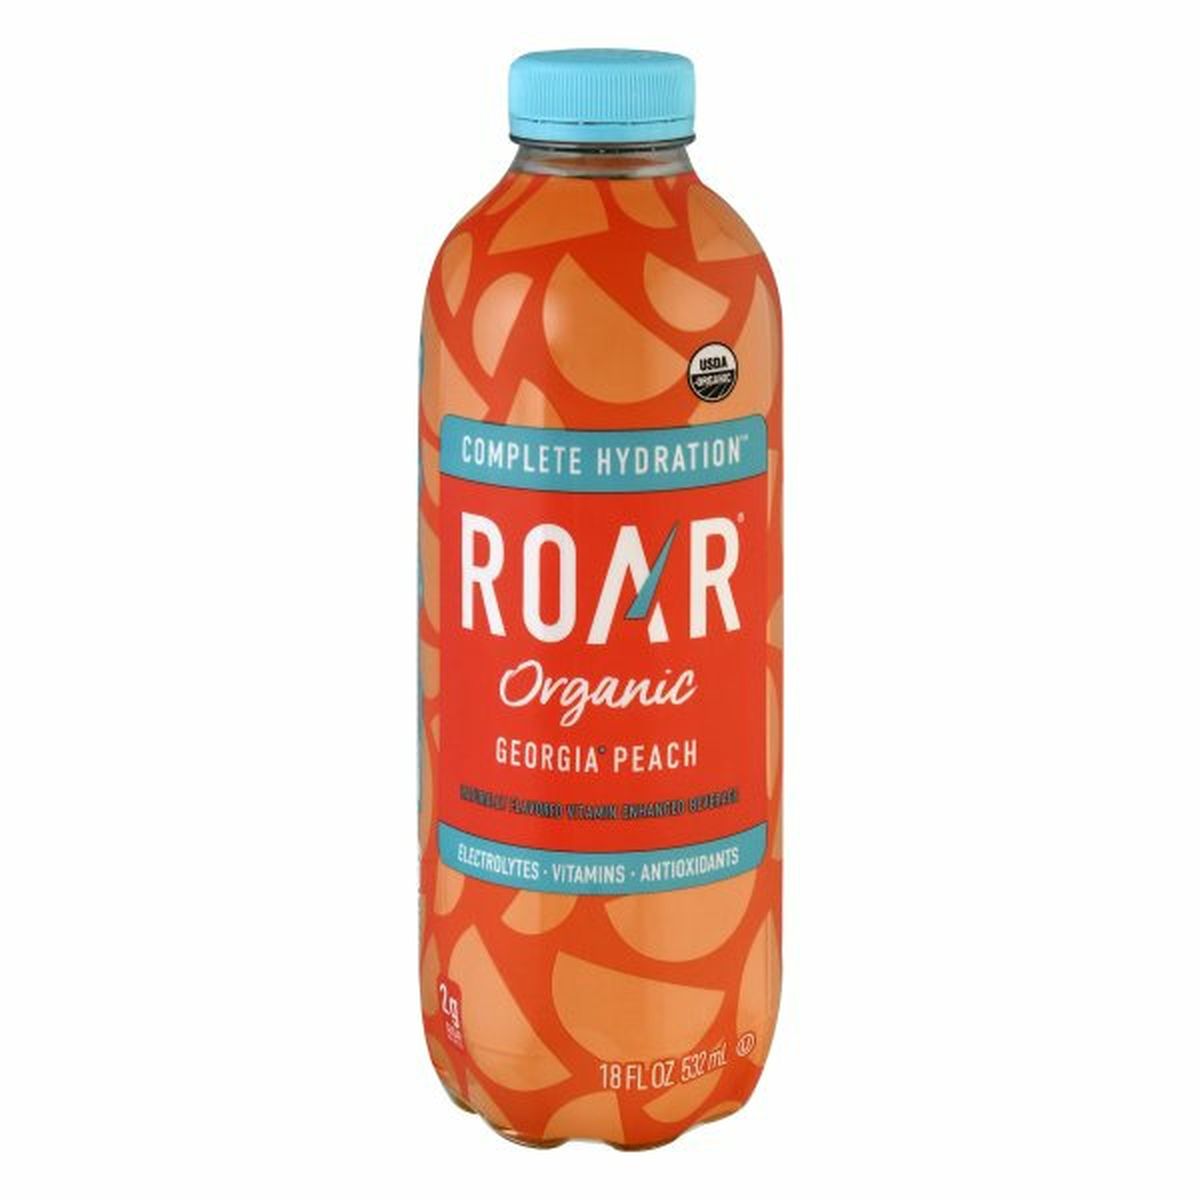 Calories in ROAR Organic Complete Hydration Vitamin Enhanced Beverage, Organic, Georgia Peach